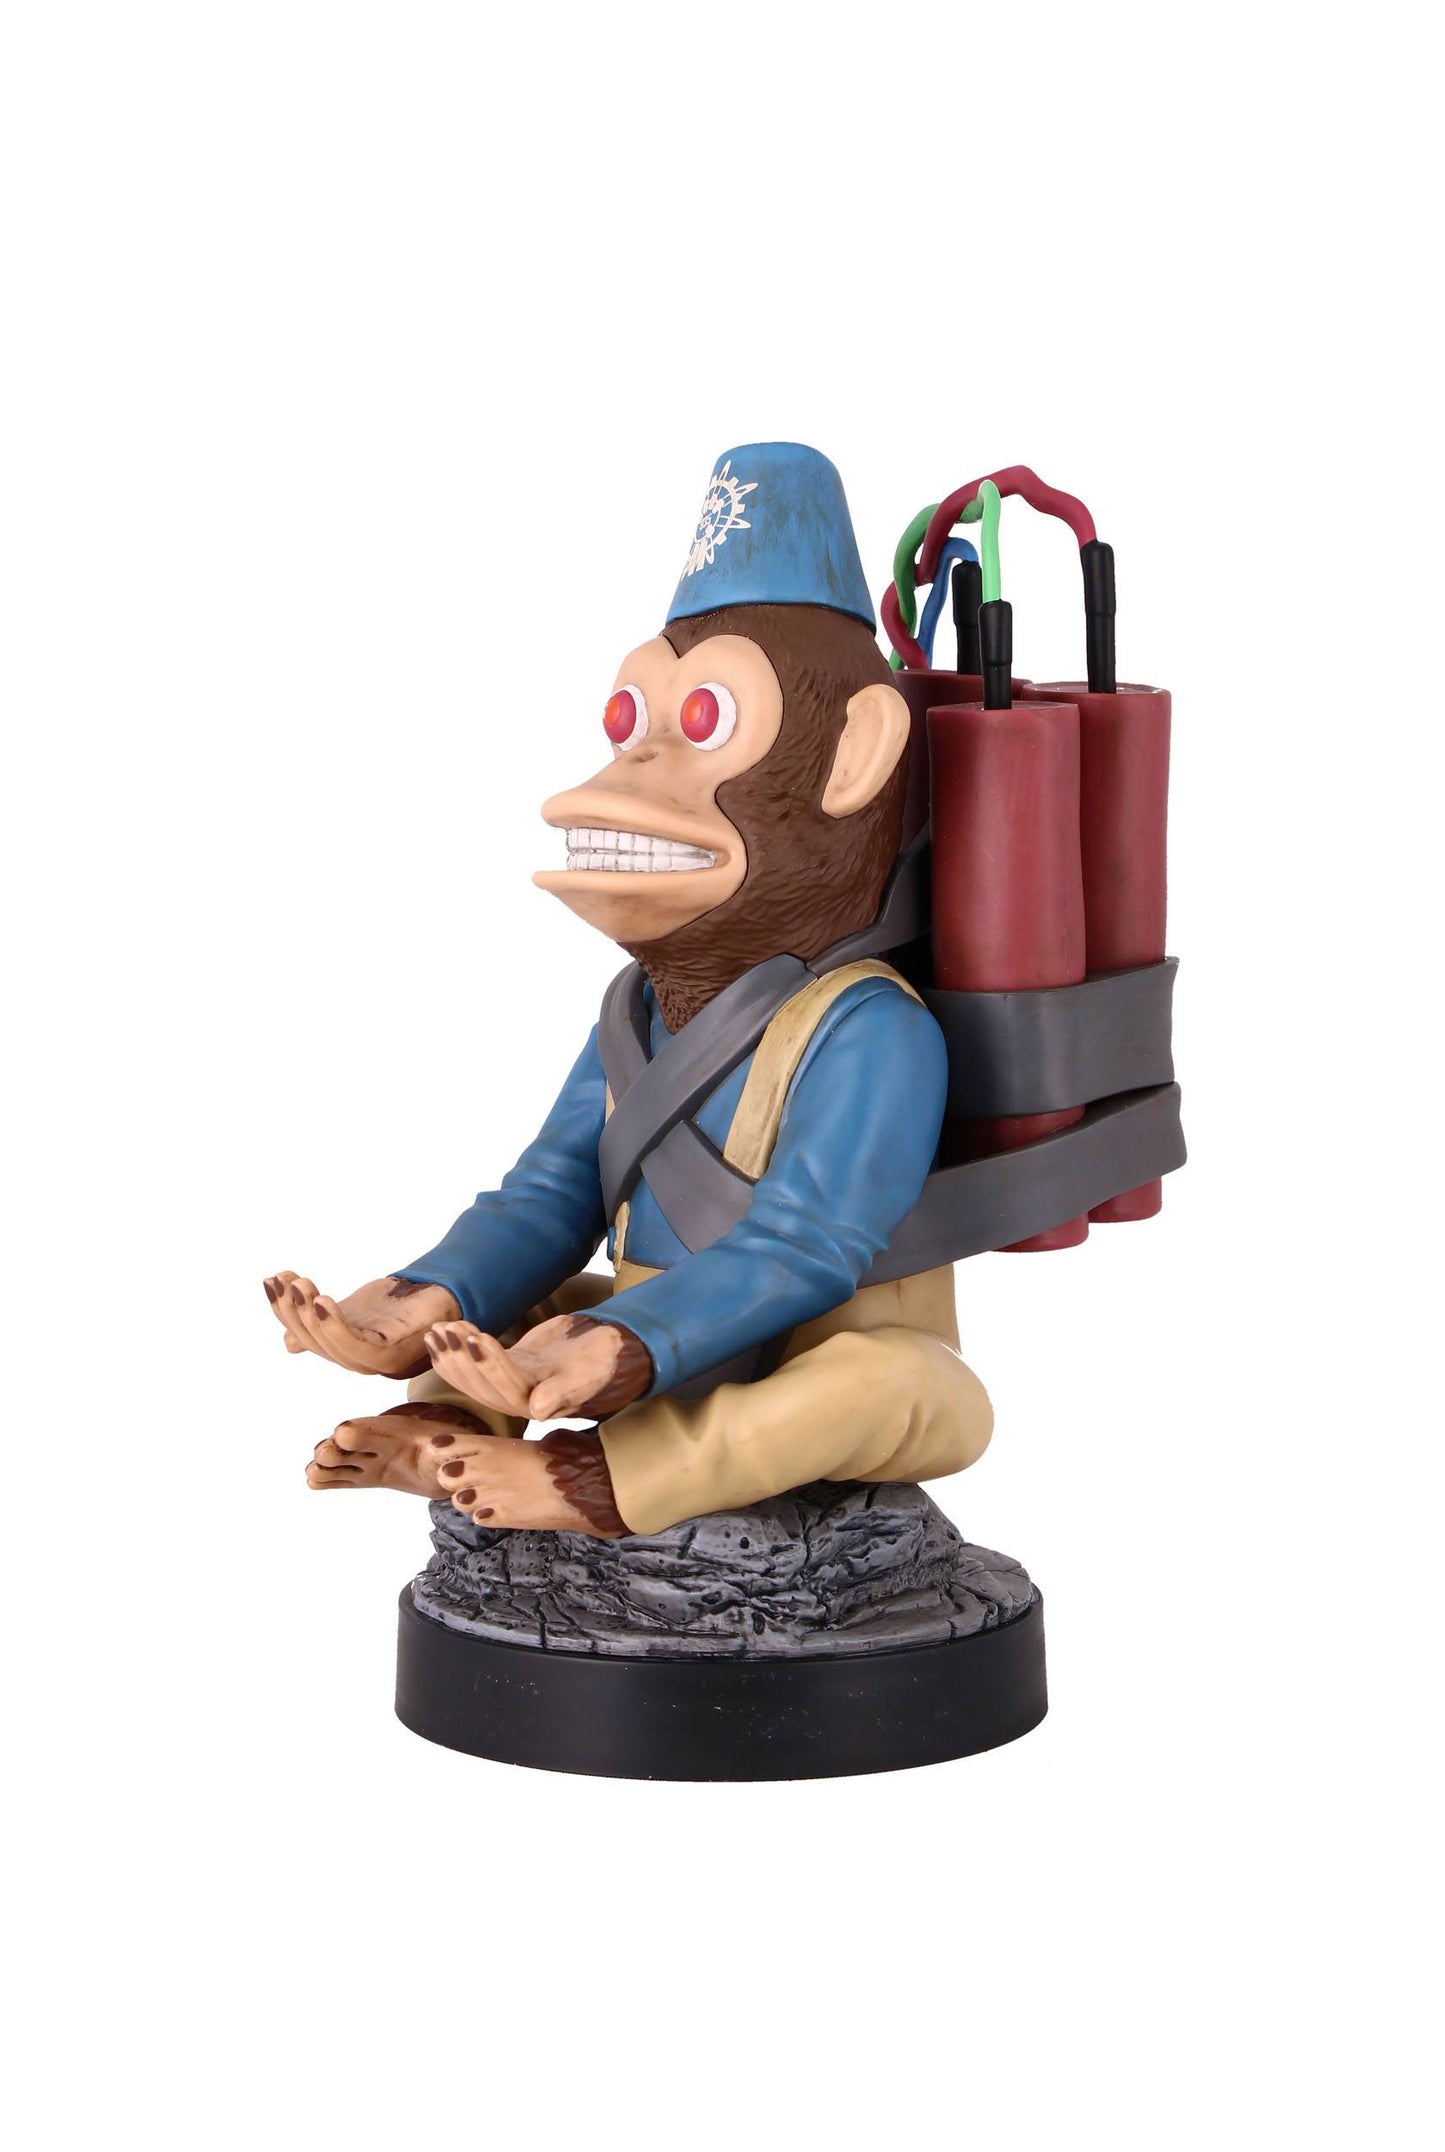 Monkey Bomb - Cable Guy